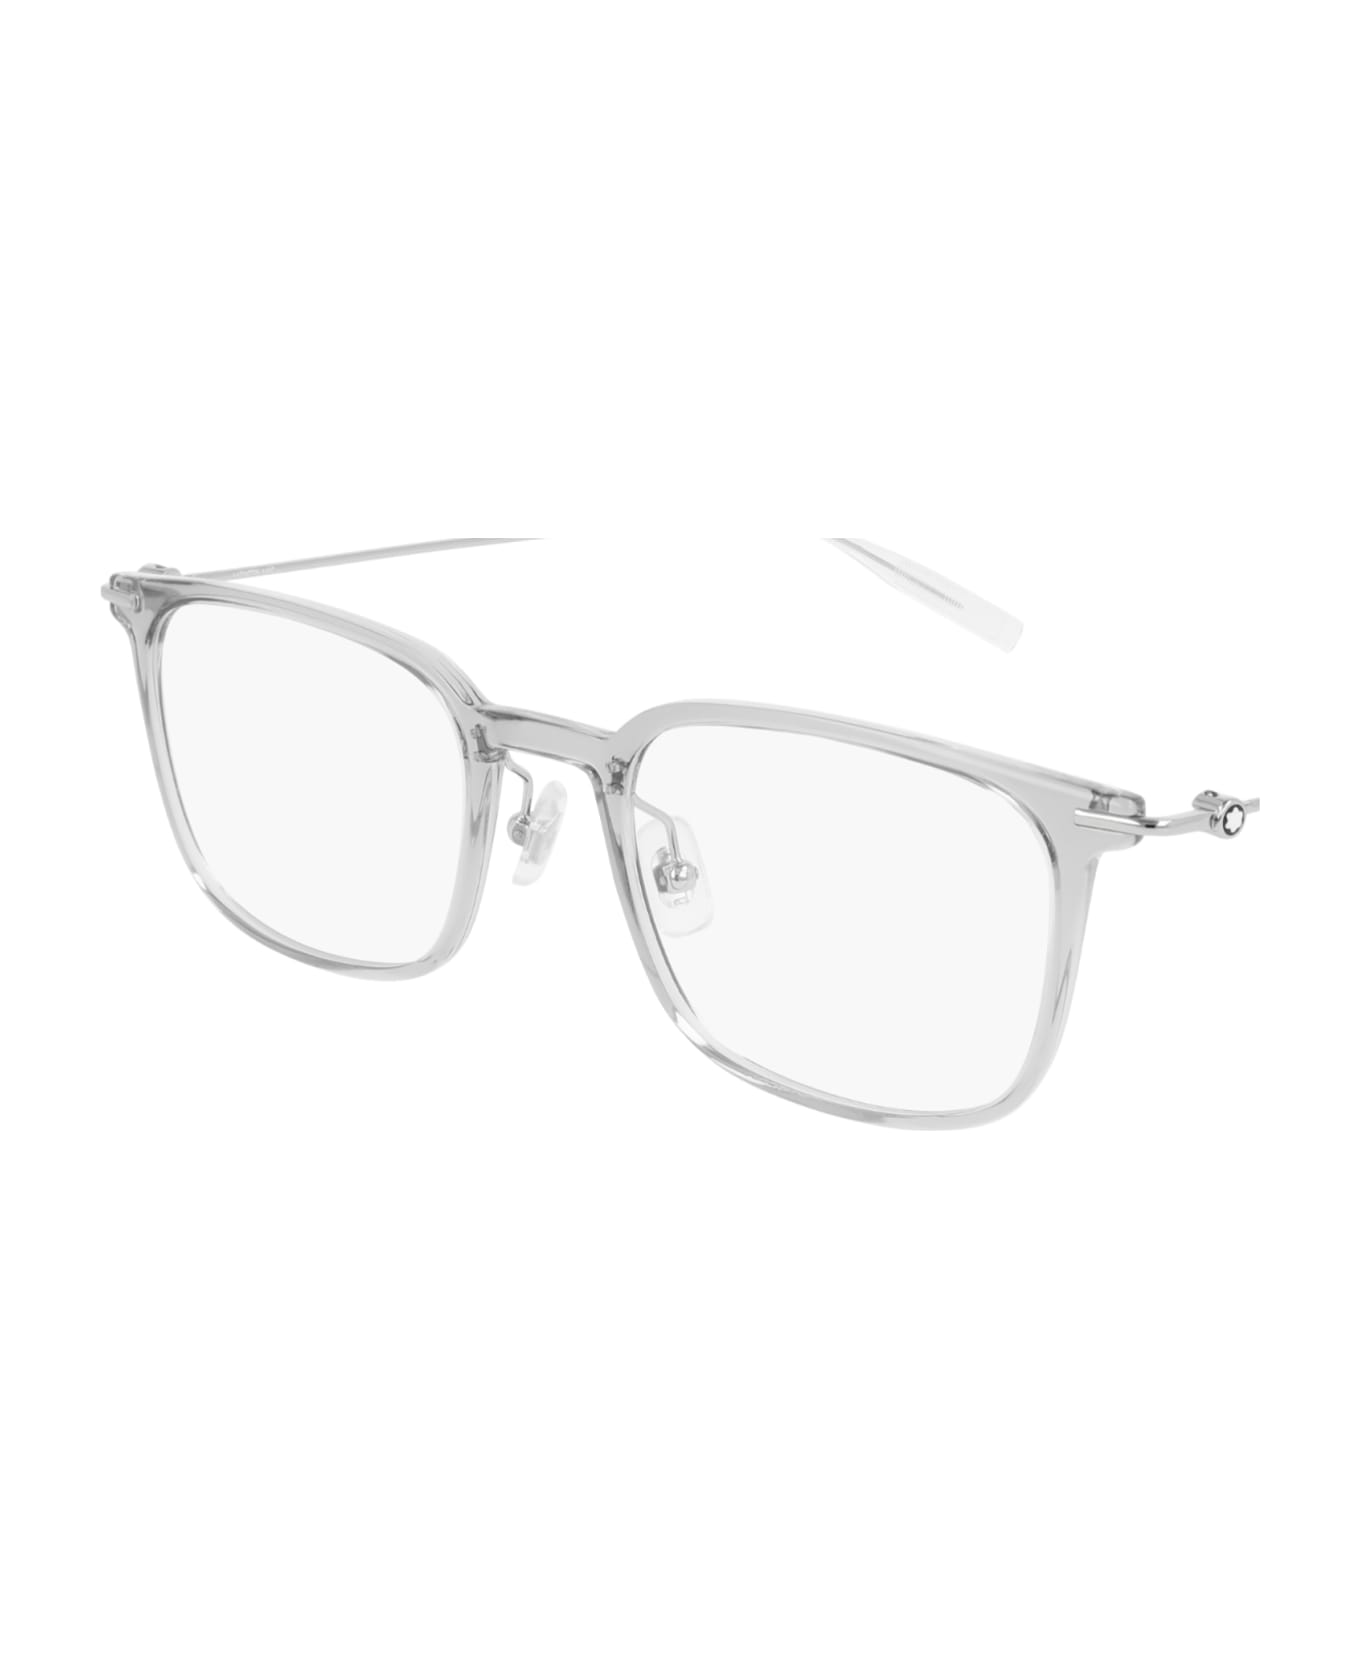 Montblanc MB0100O Eyewear - Grey Silver Transpare